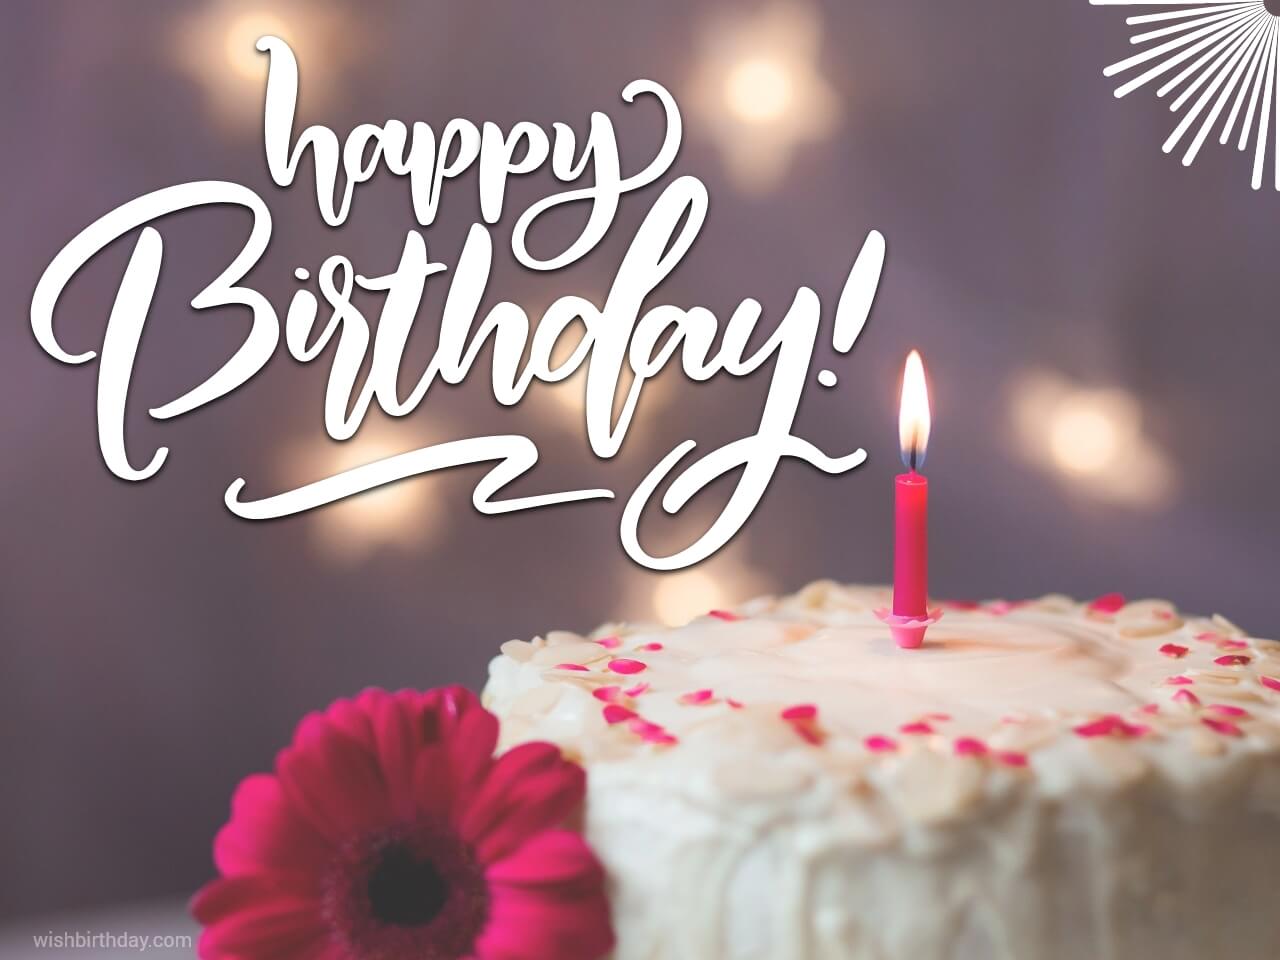 Happy Birthday With Candle Cake - Birthday Wishes, Happy Birthday ...